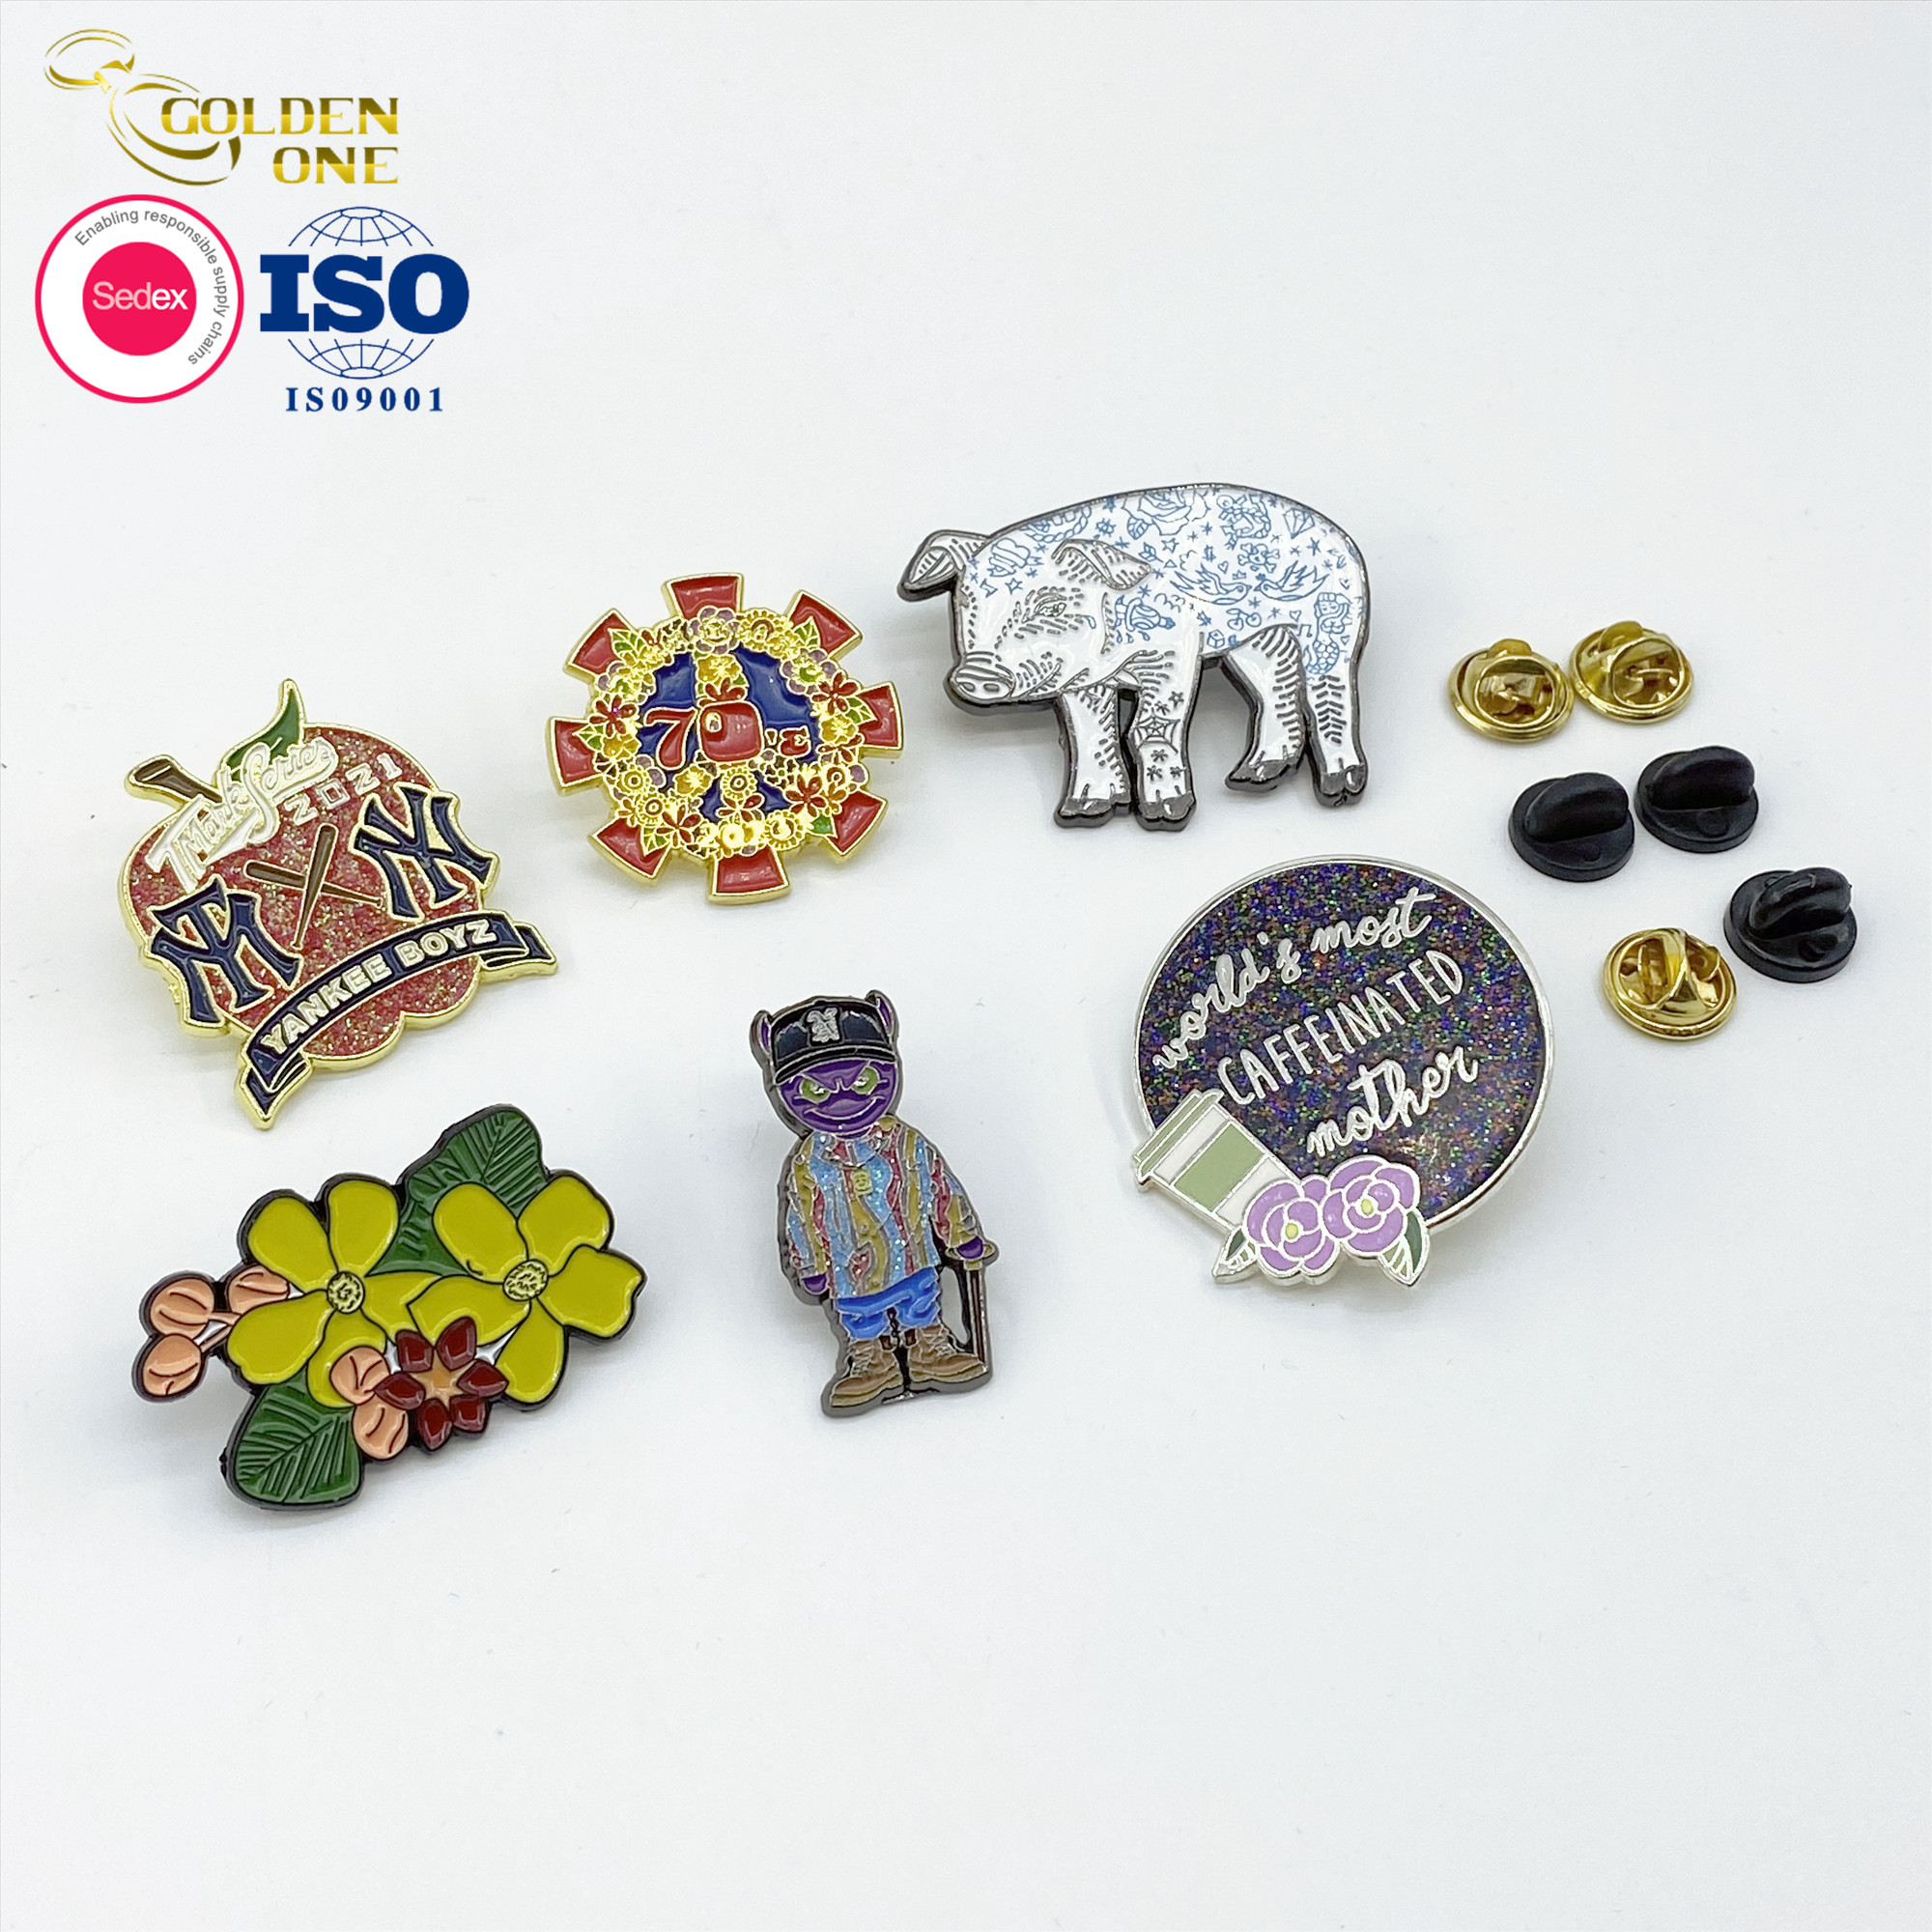 manufacture customized cute cartoon logo rose gold plating metal hard enamel badge lapel pins for souvenirs